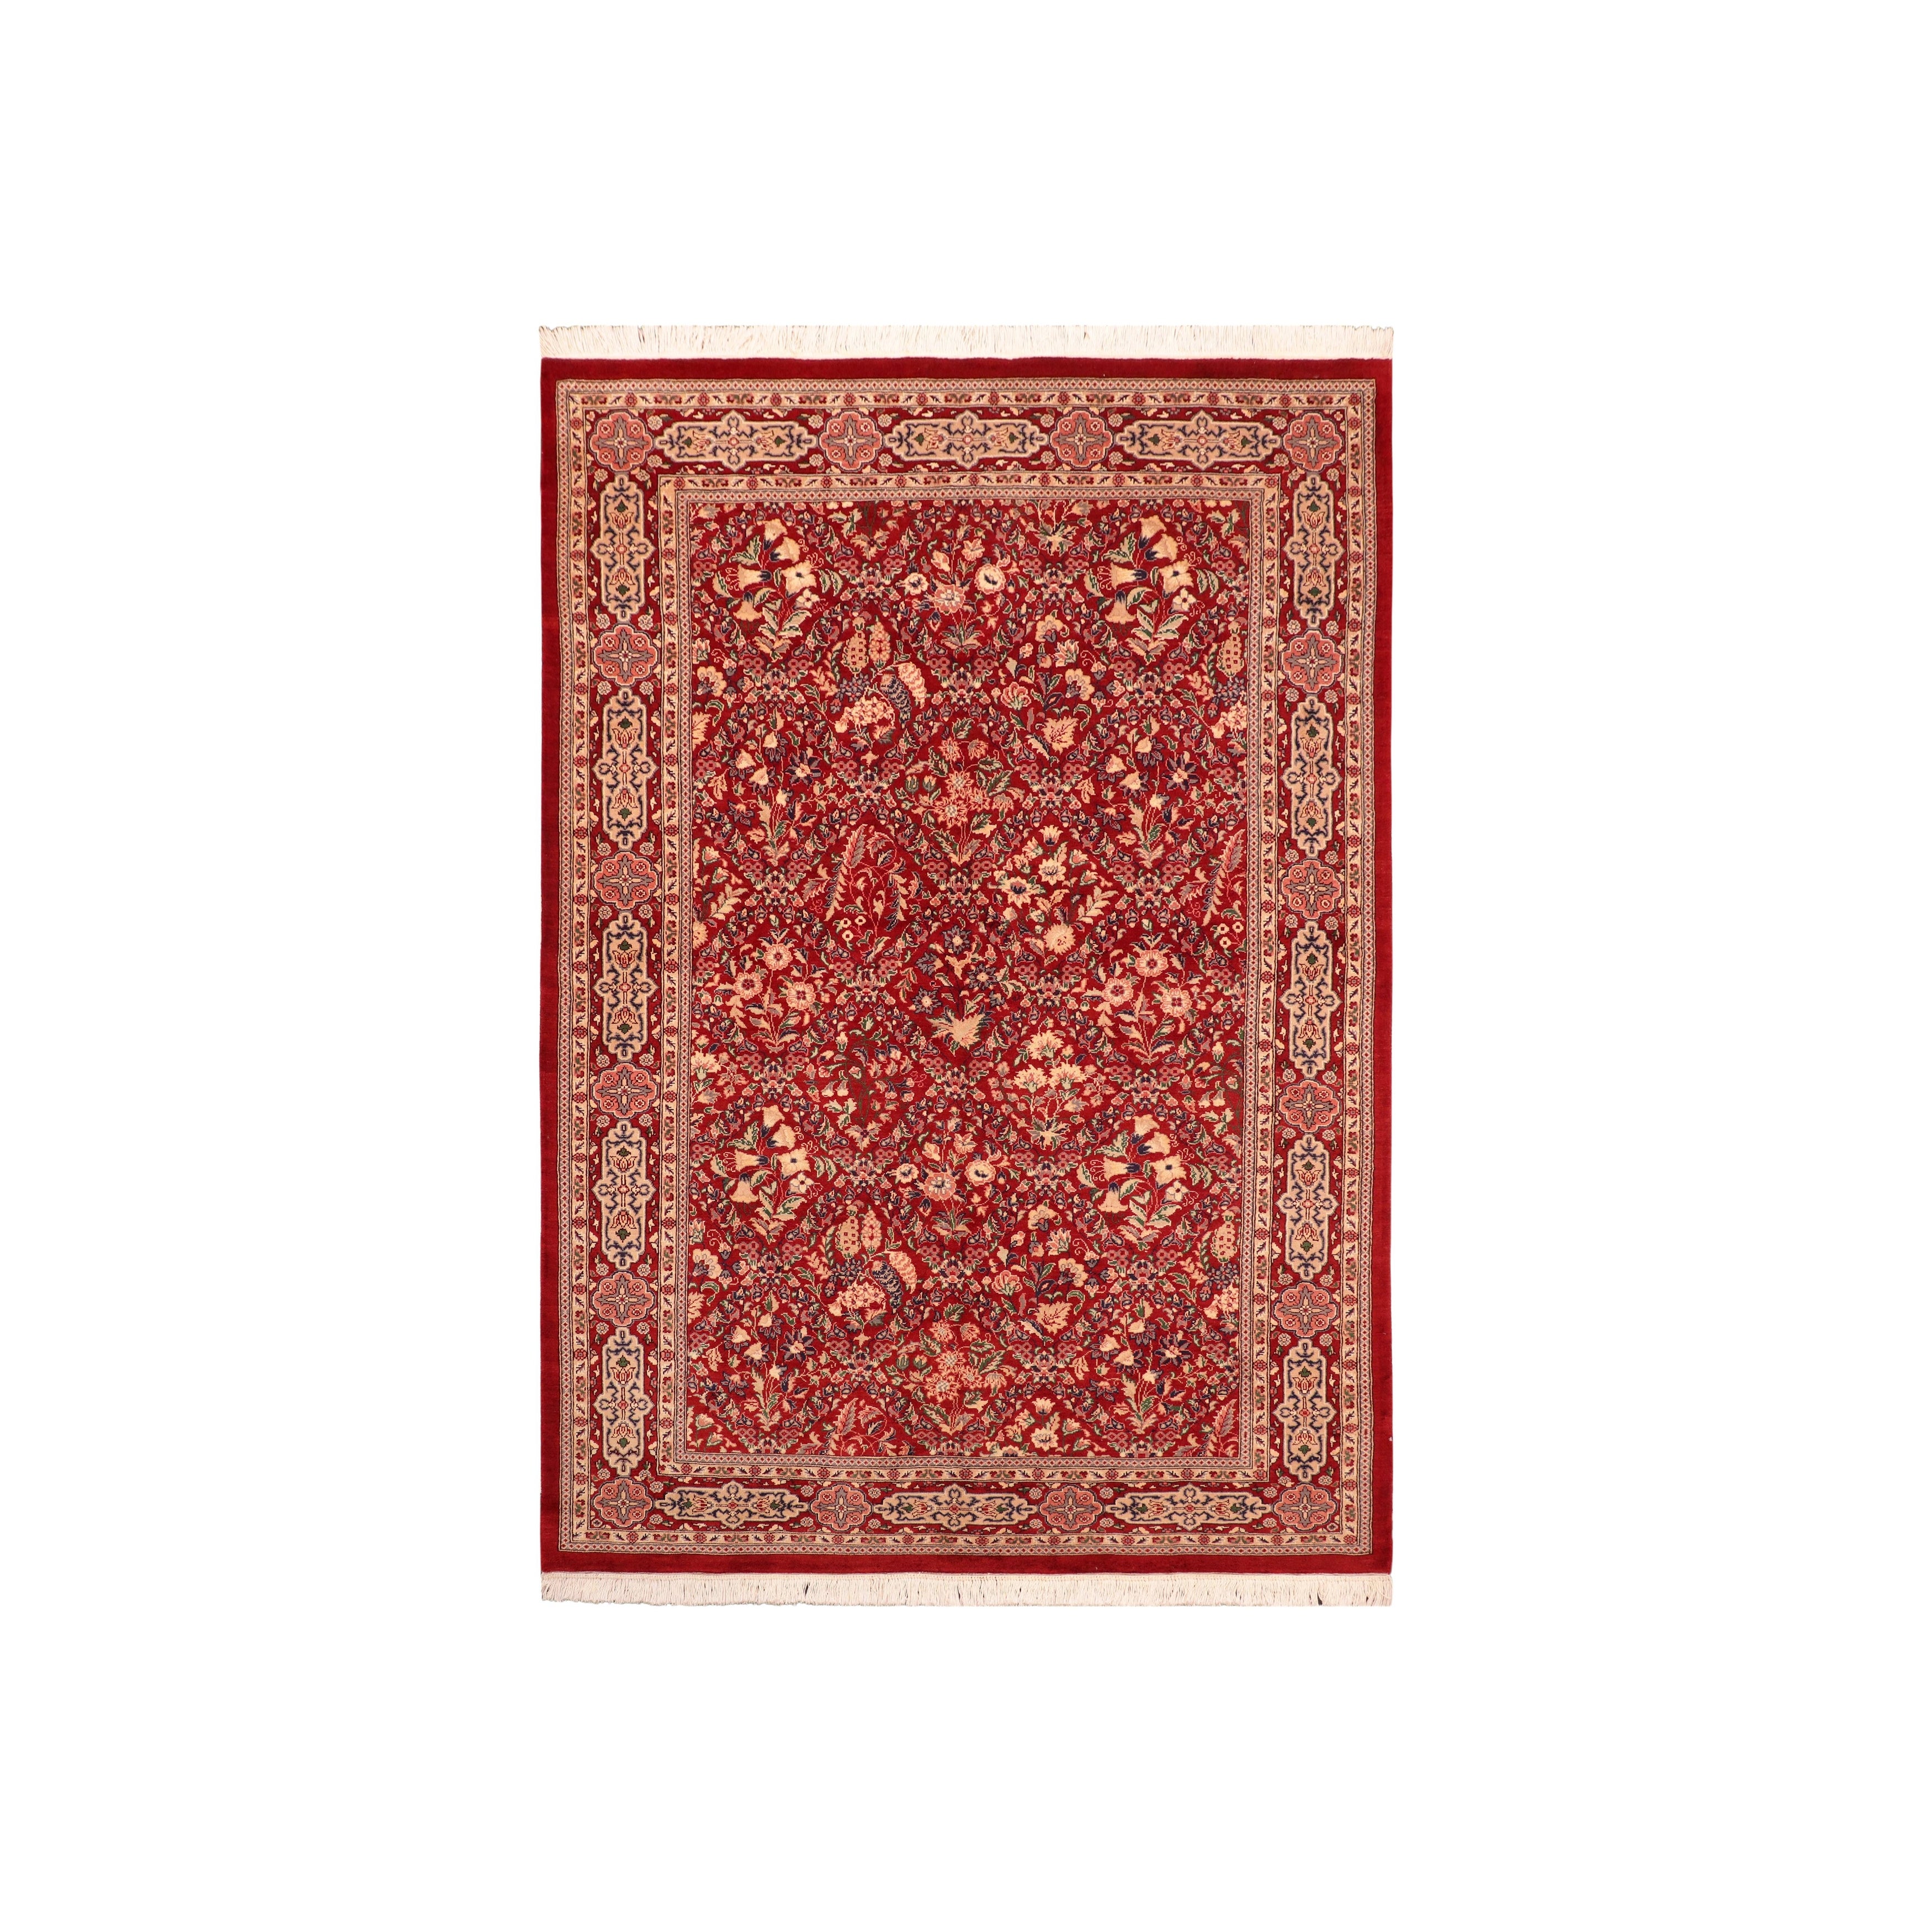 Pak-Persian Tabriz Red Tan Wool Rug - 6'1 x 9'2 - 6'1